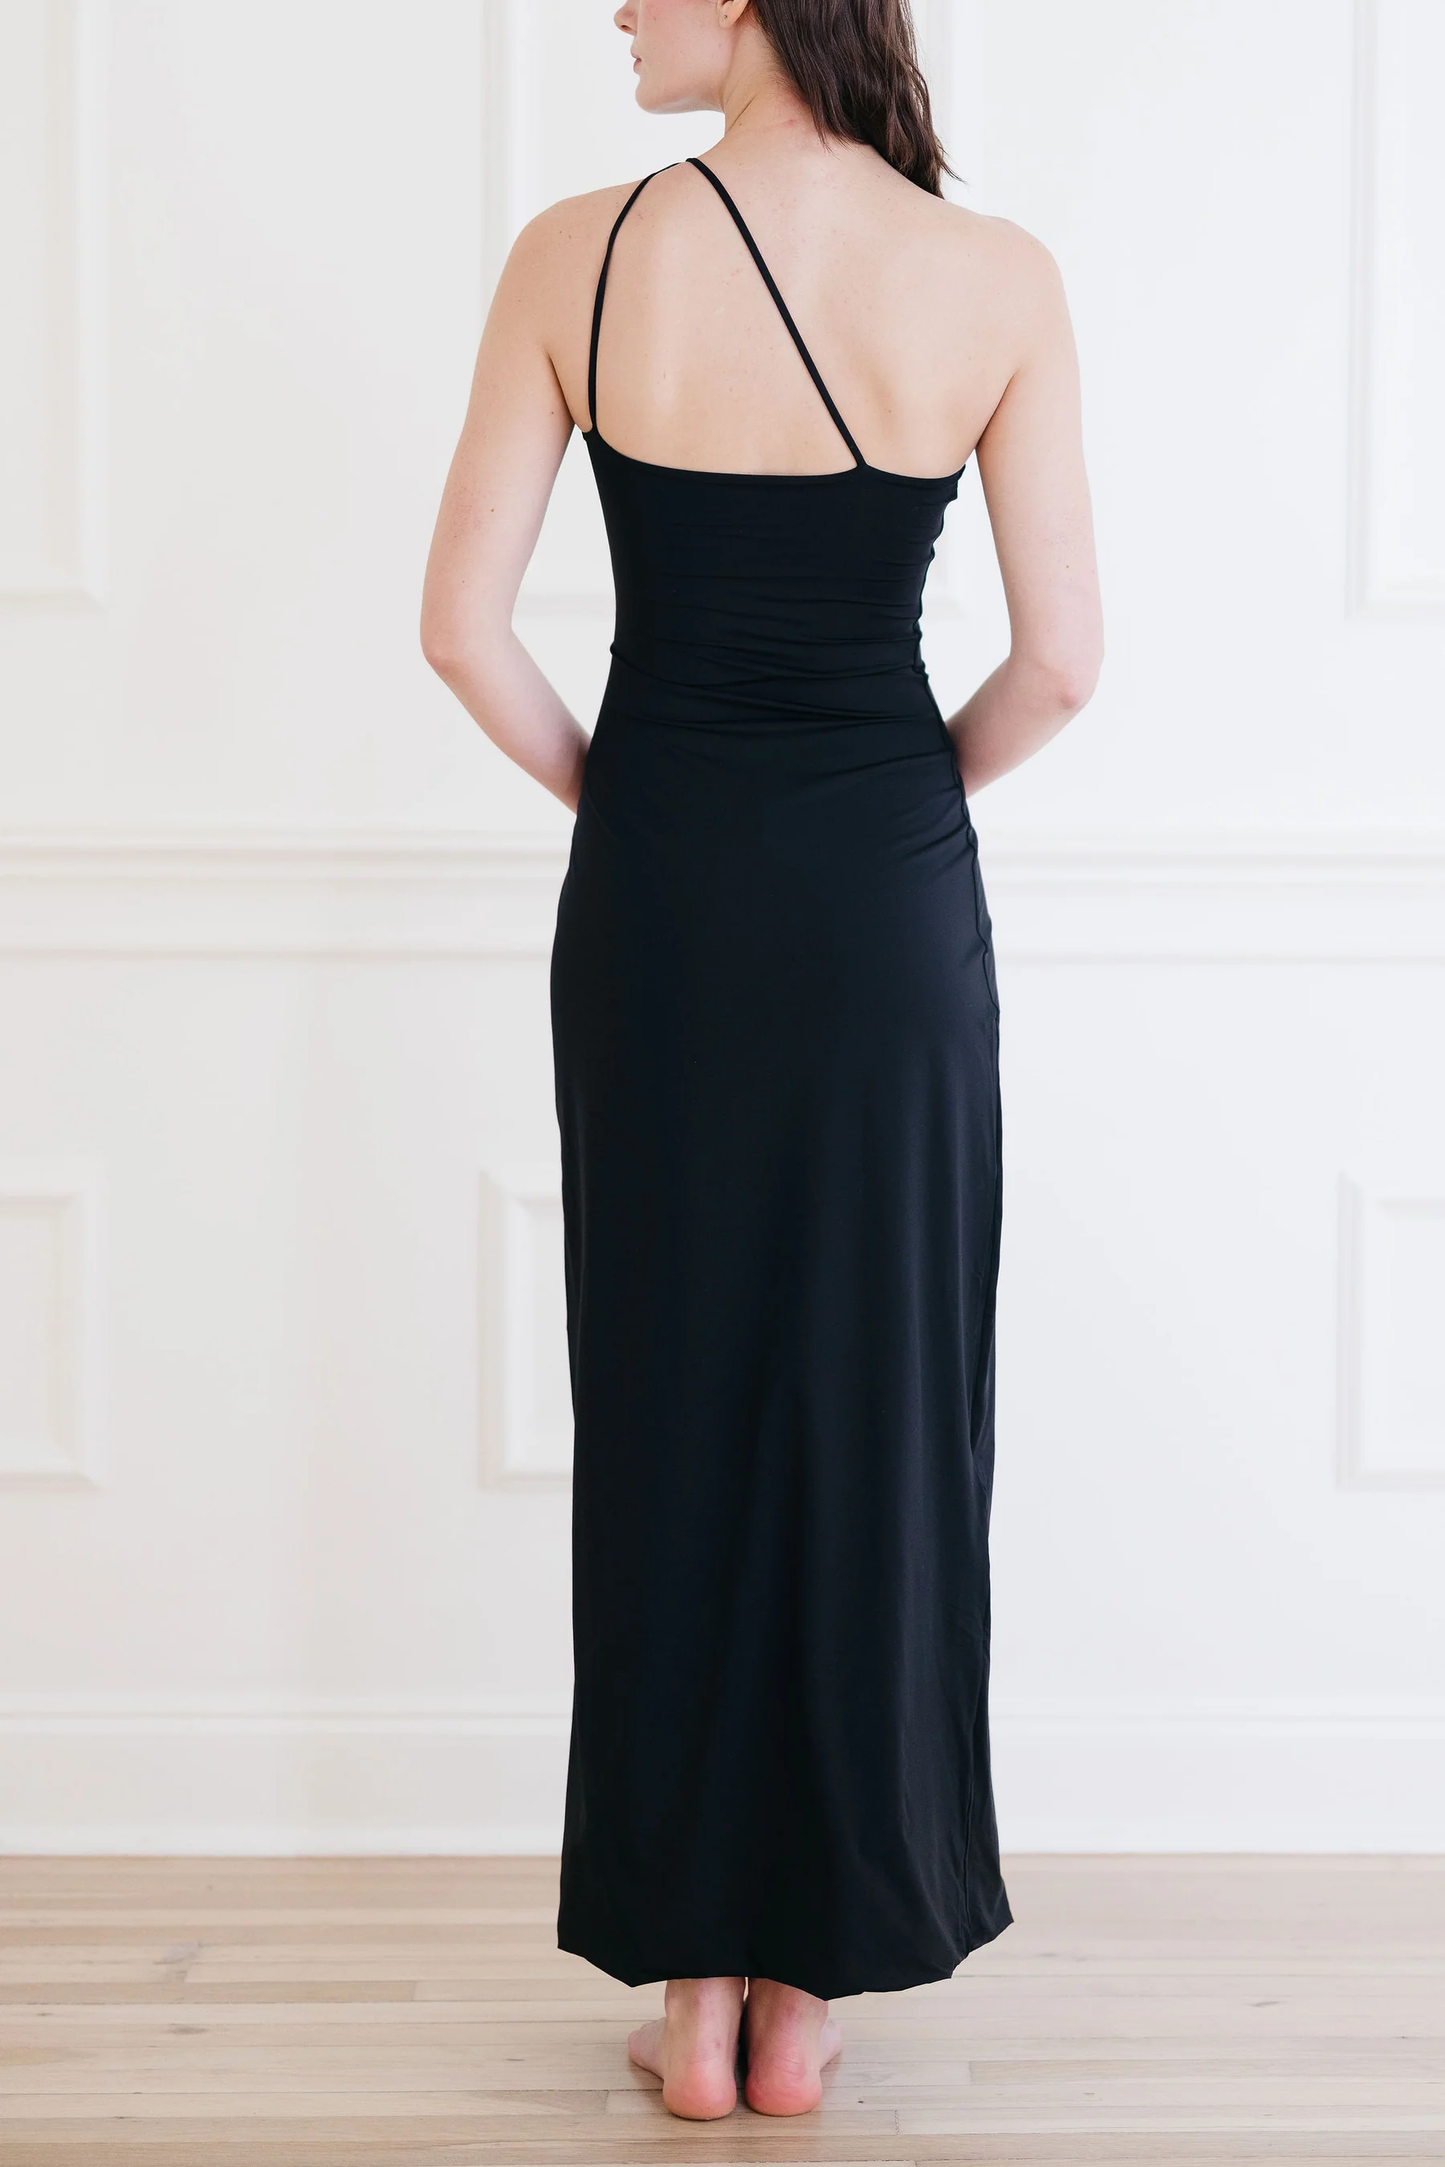 Classy Black Pary Dress One Shoulder Simple Evening Dress, DP2242